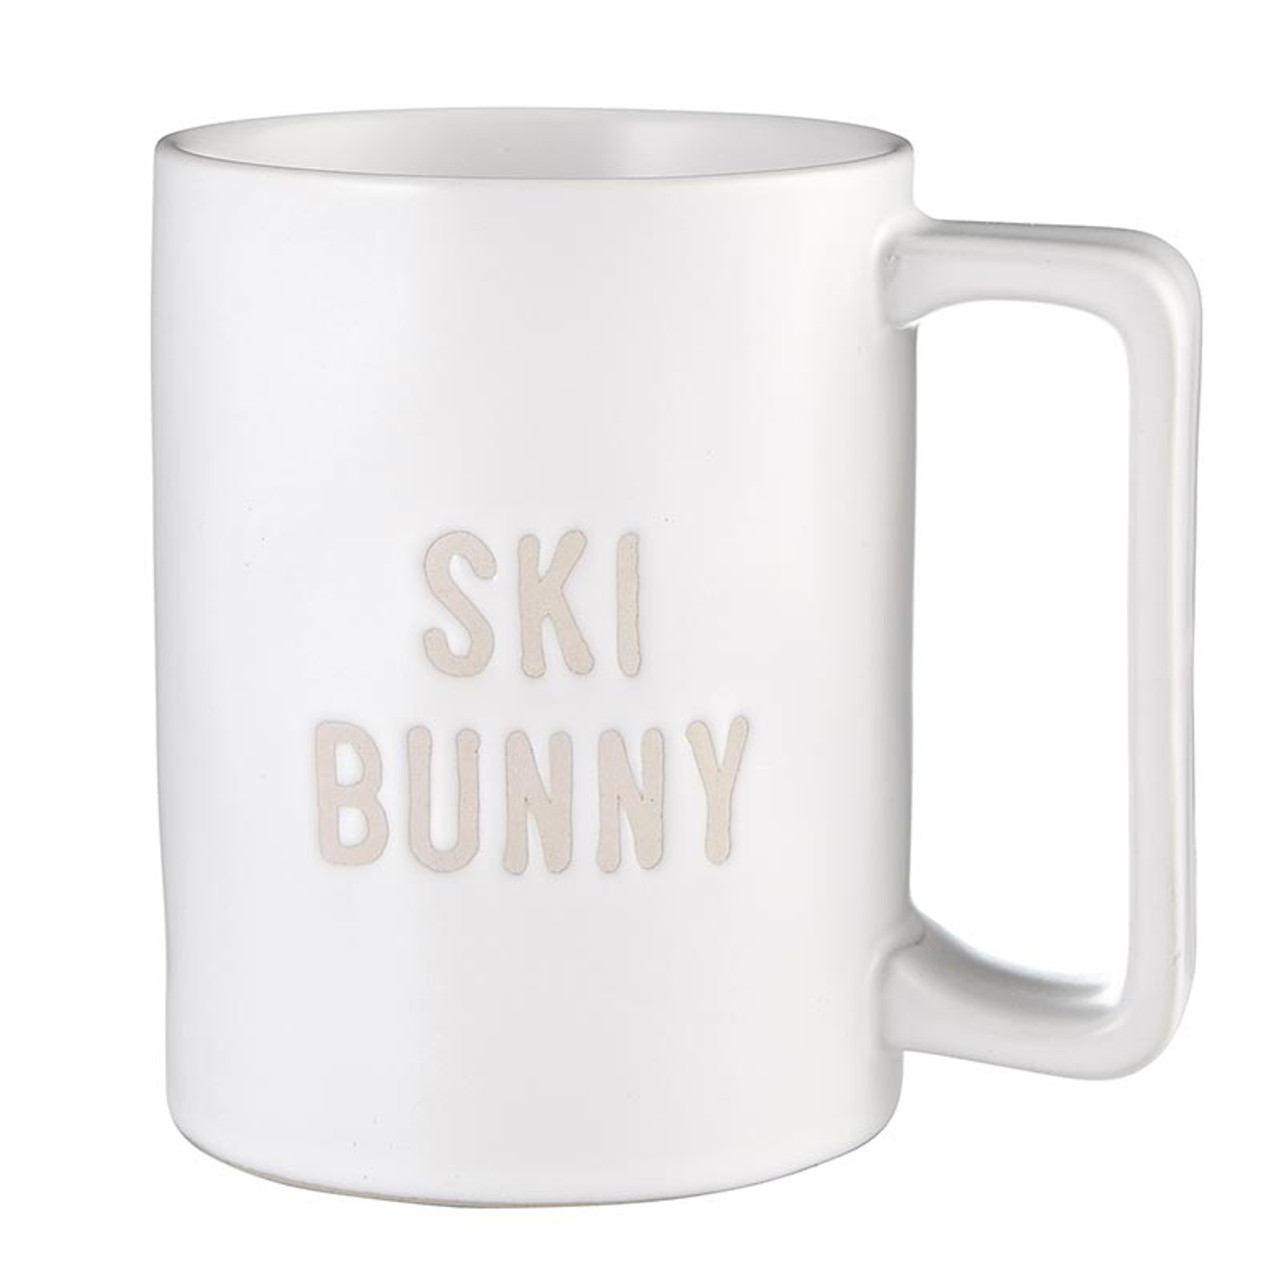 Face To Face Tall Coffee Mug - Ski Bunny - Santa Barbara Design Studio